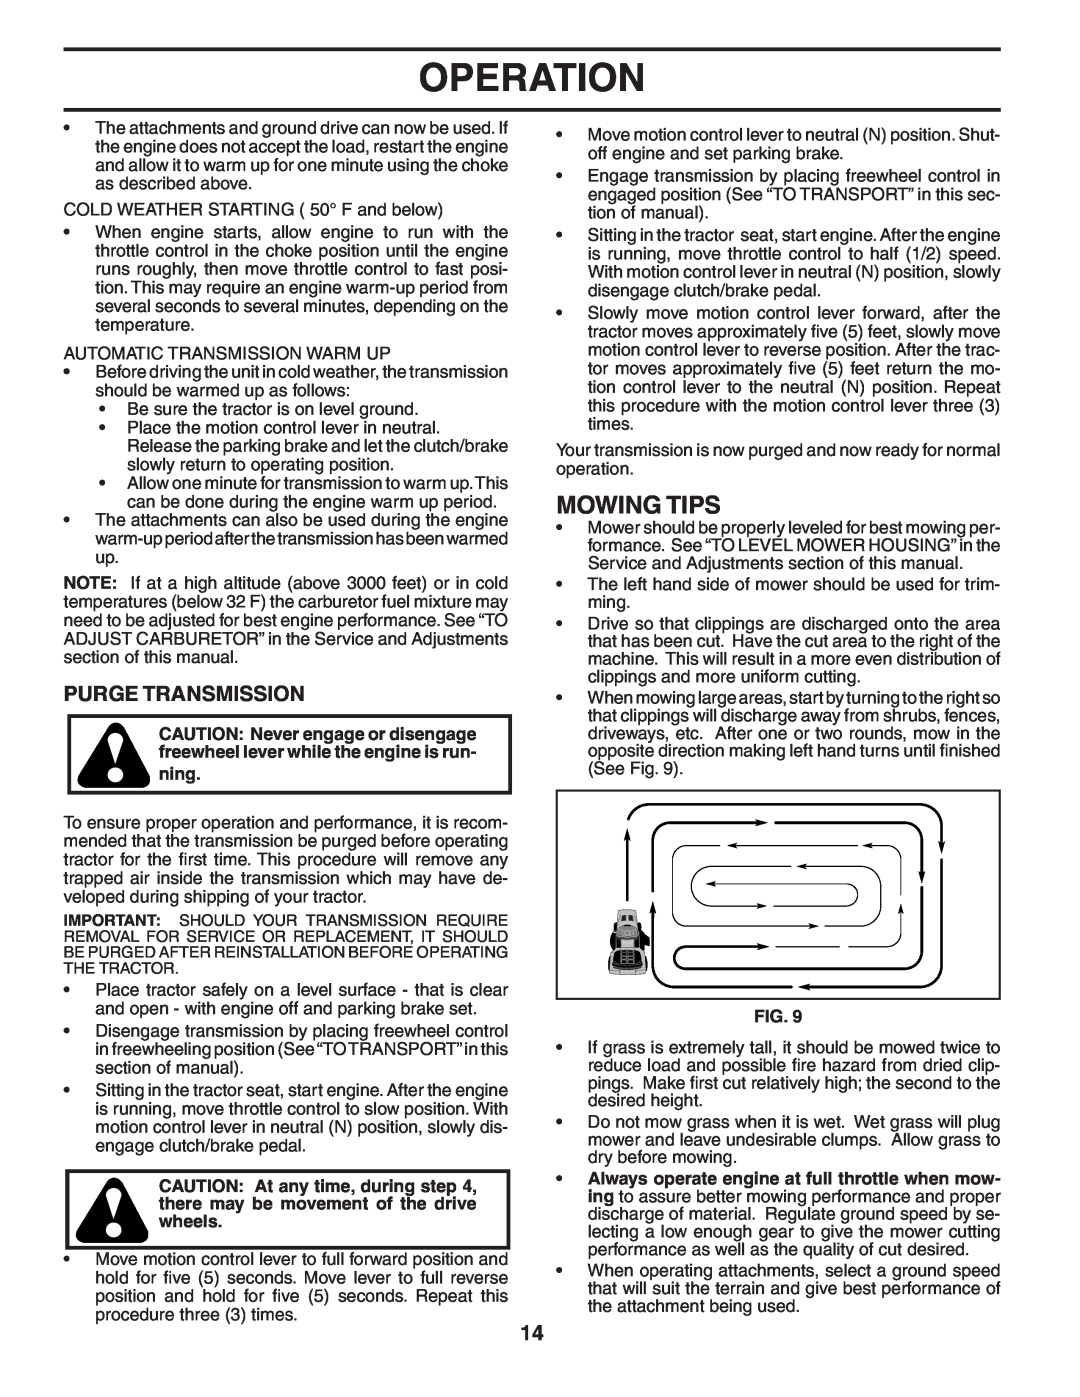 Poulan 405327 manual Mowing Tips, Purge Transmission, Operation 